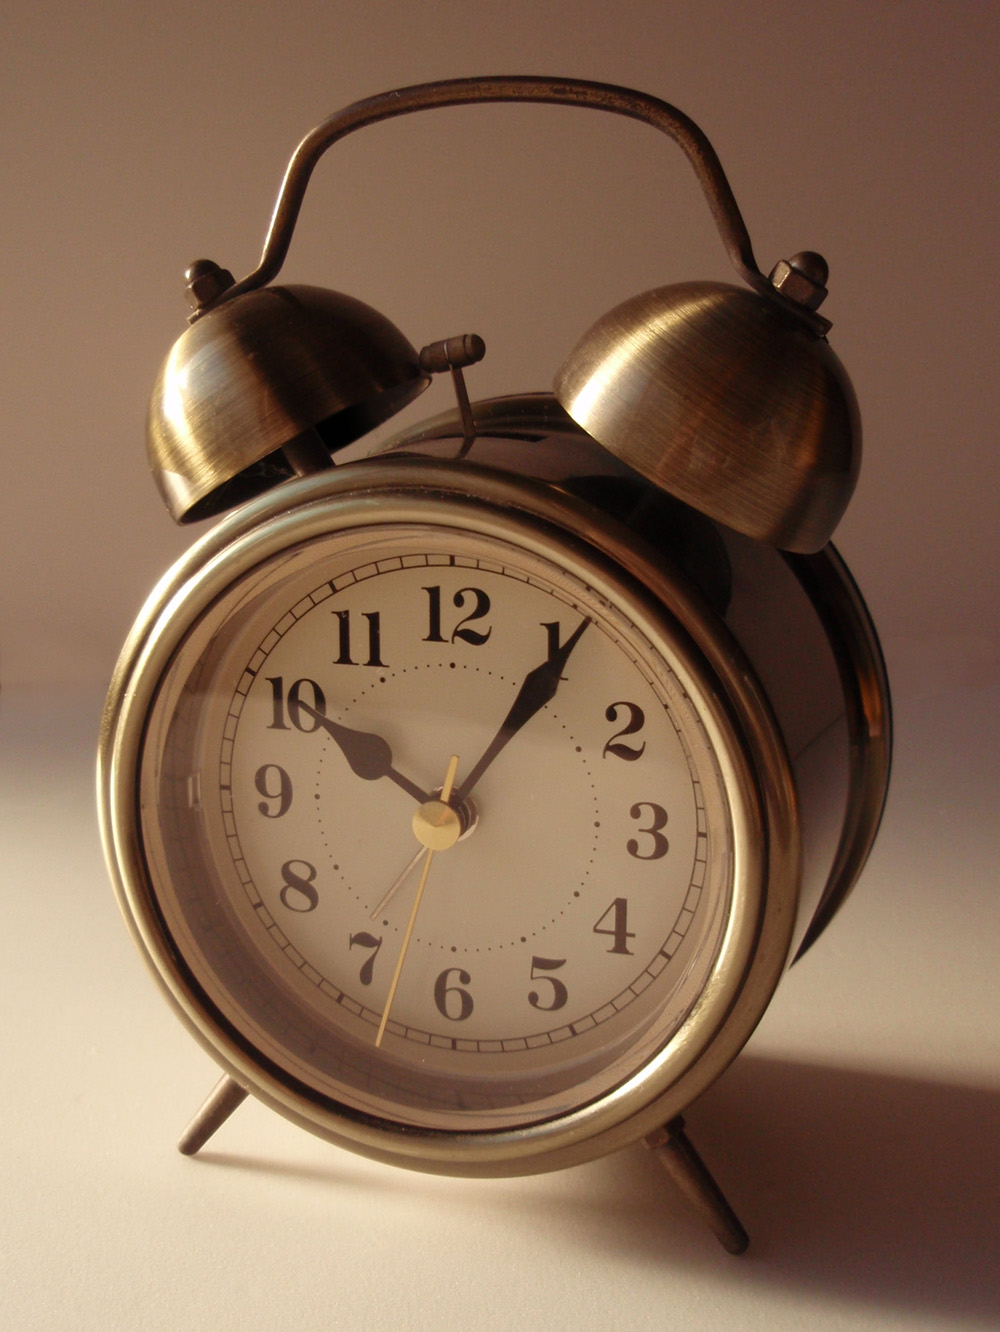 File:Alarm Clocks 20101105.jpg - Wikimedia Commons